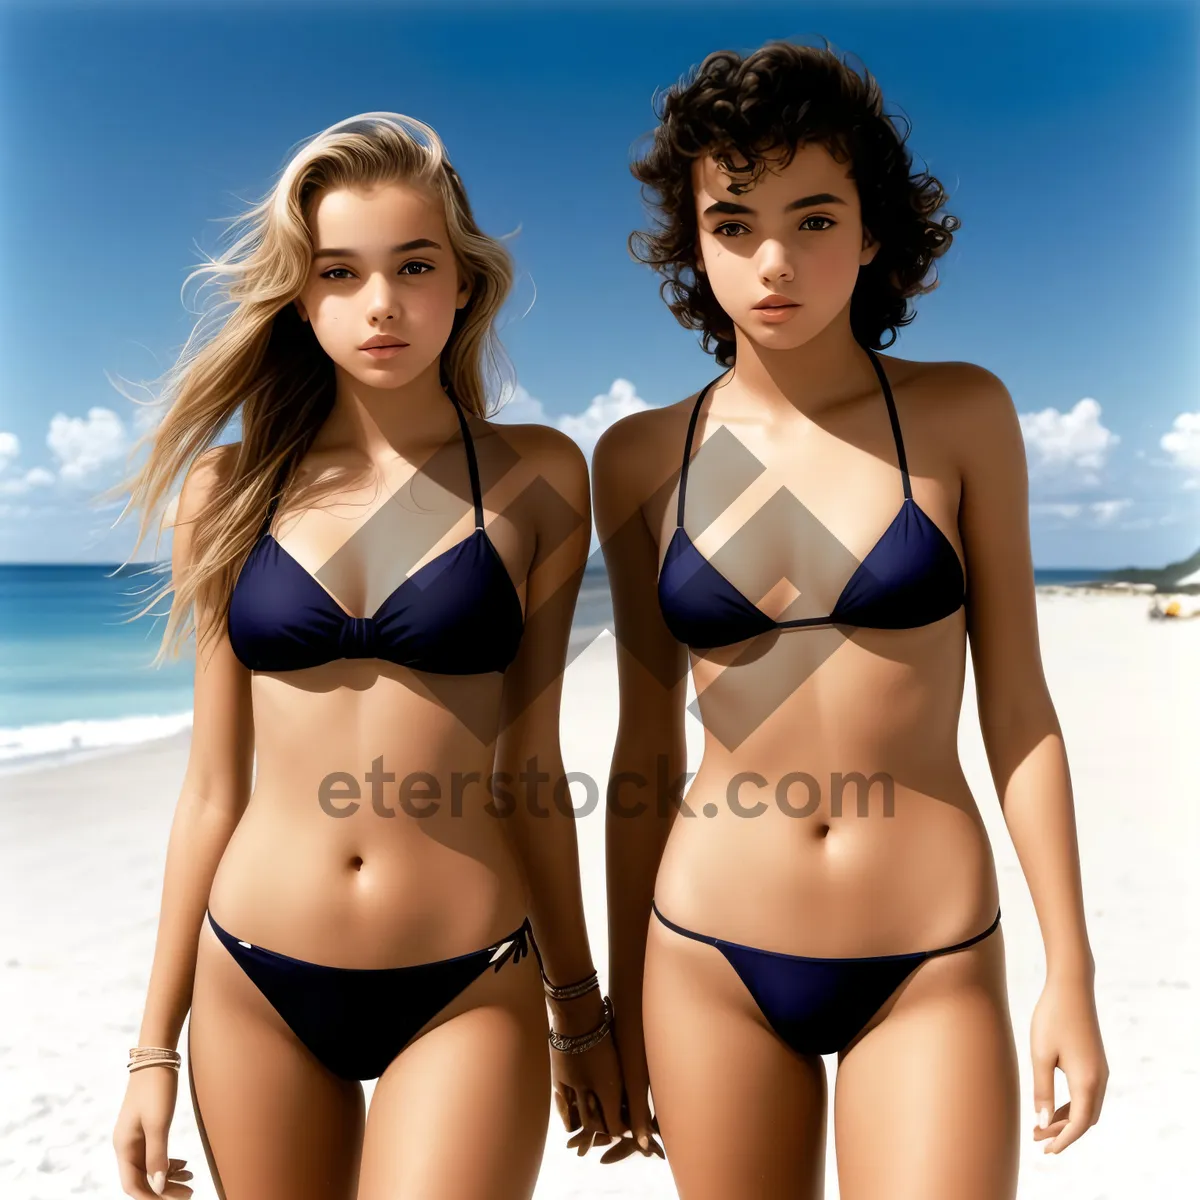 Picture of Bikini Model Posing Sensually on Beach